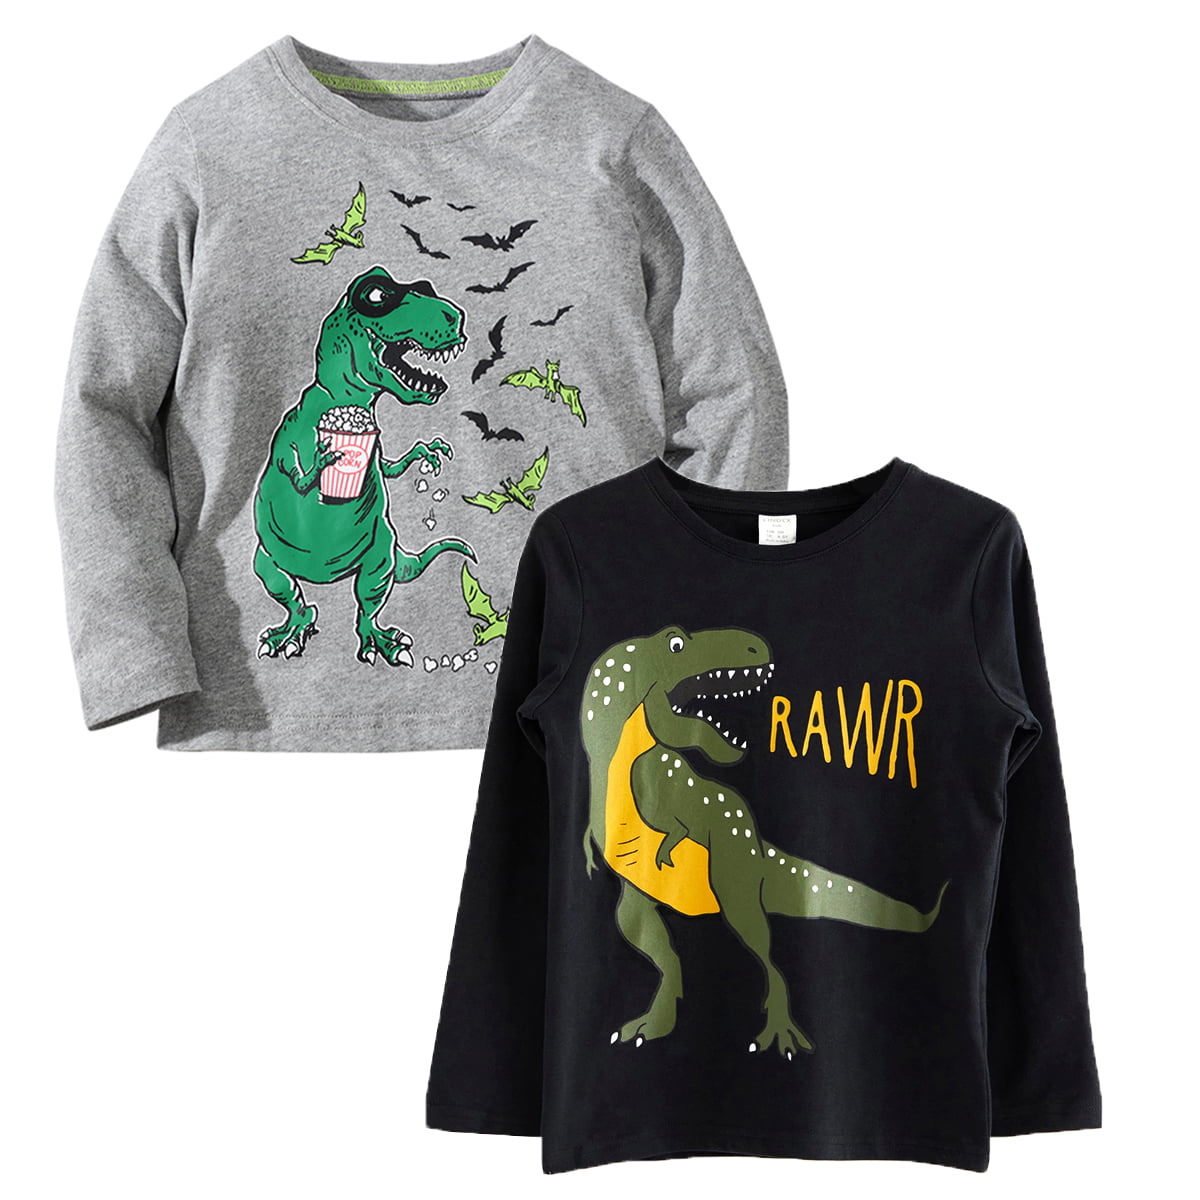 Details about   Infant & Toddler Boys White T-Rex Dinosaur Muscle T-Shirt & Short Set Outfit 12M 